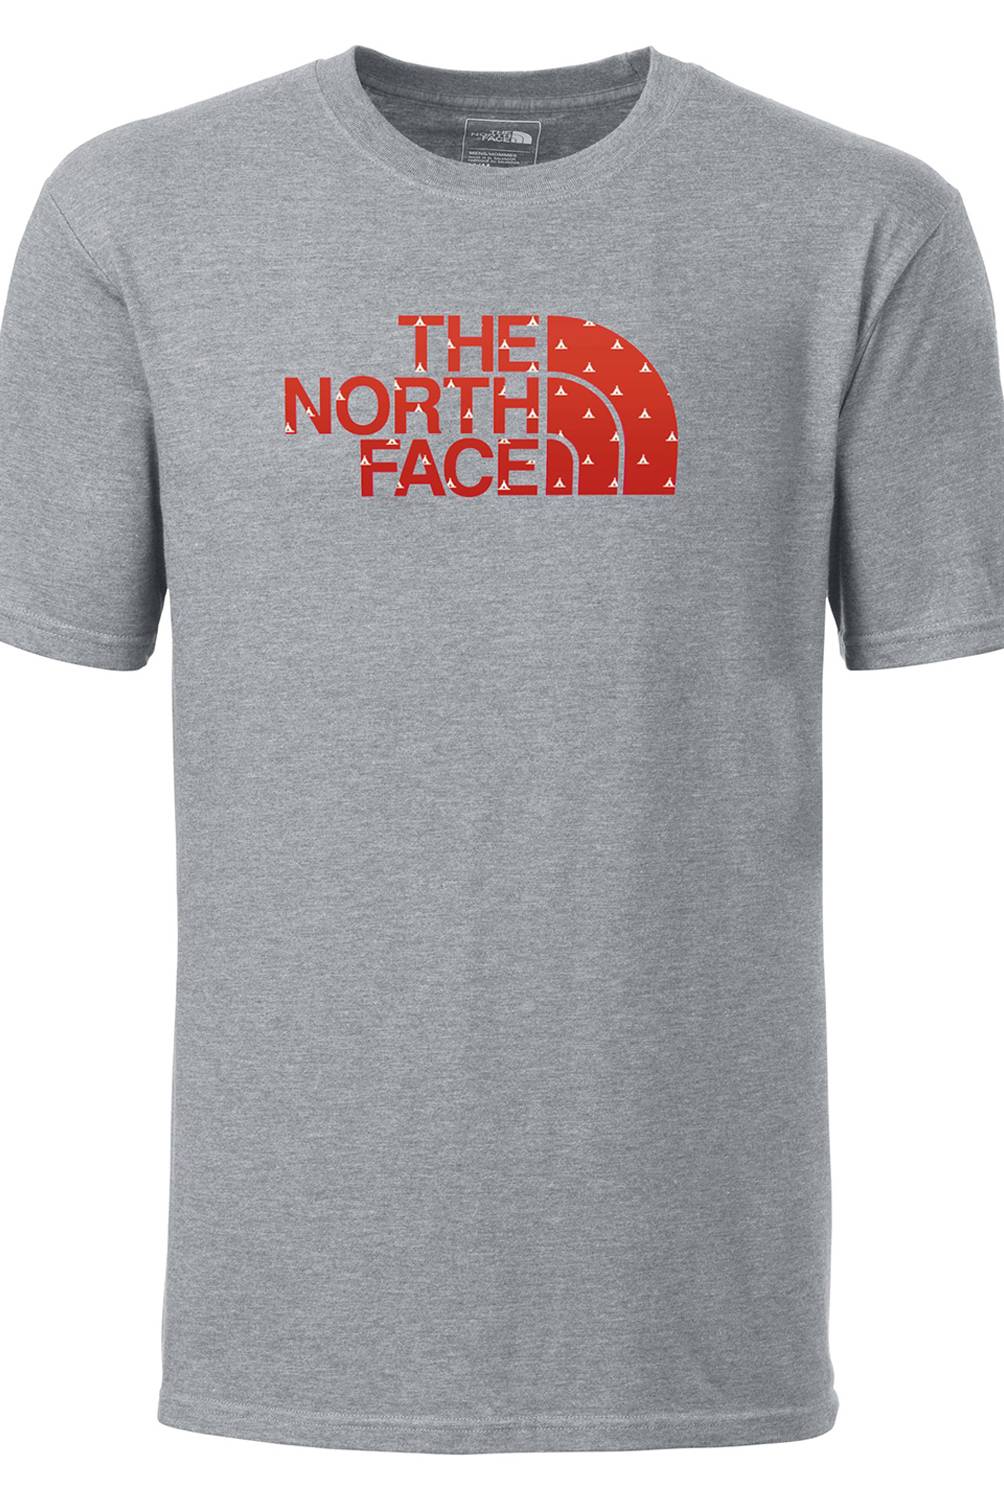 The North Face - Poleras